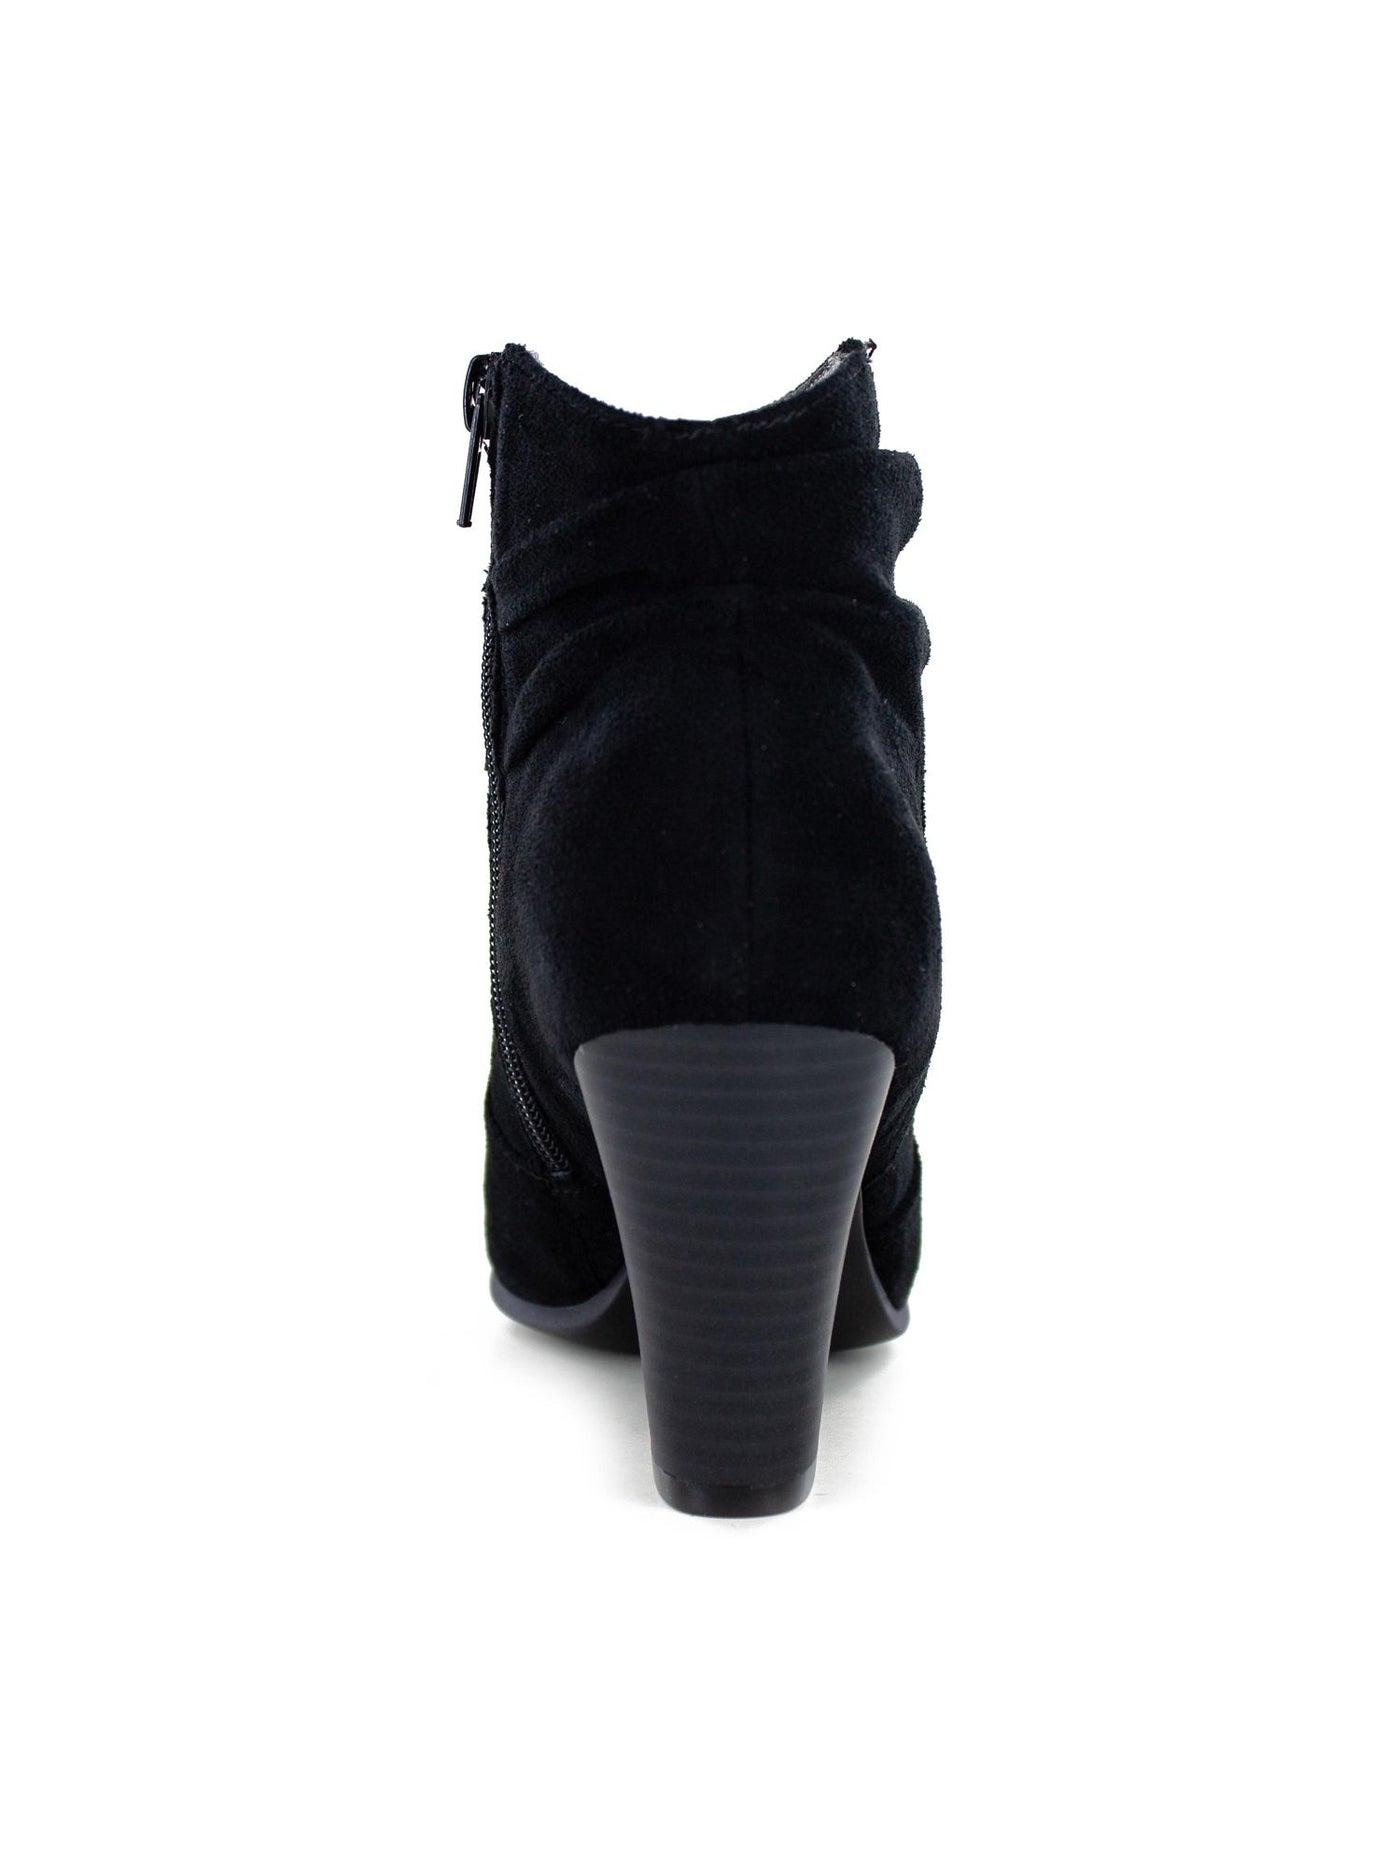 SEVEN DIALS Womens Black Comfort Padded Ruched Halsey Pointed Toe Block Heel Zip-Up Booties 10 M